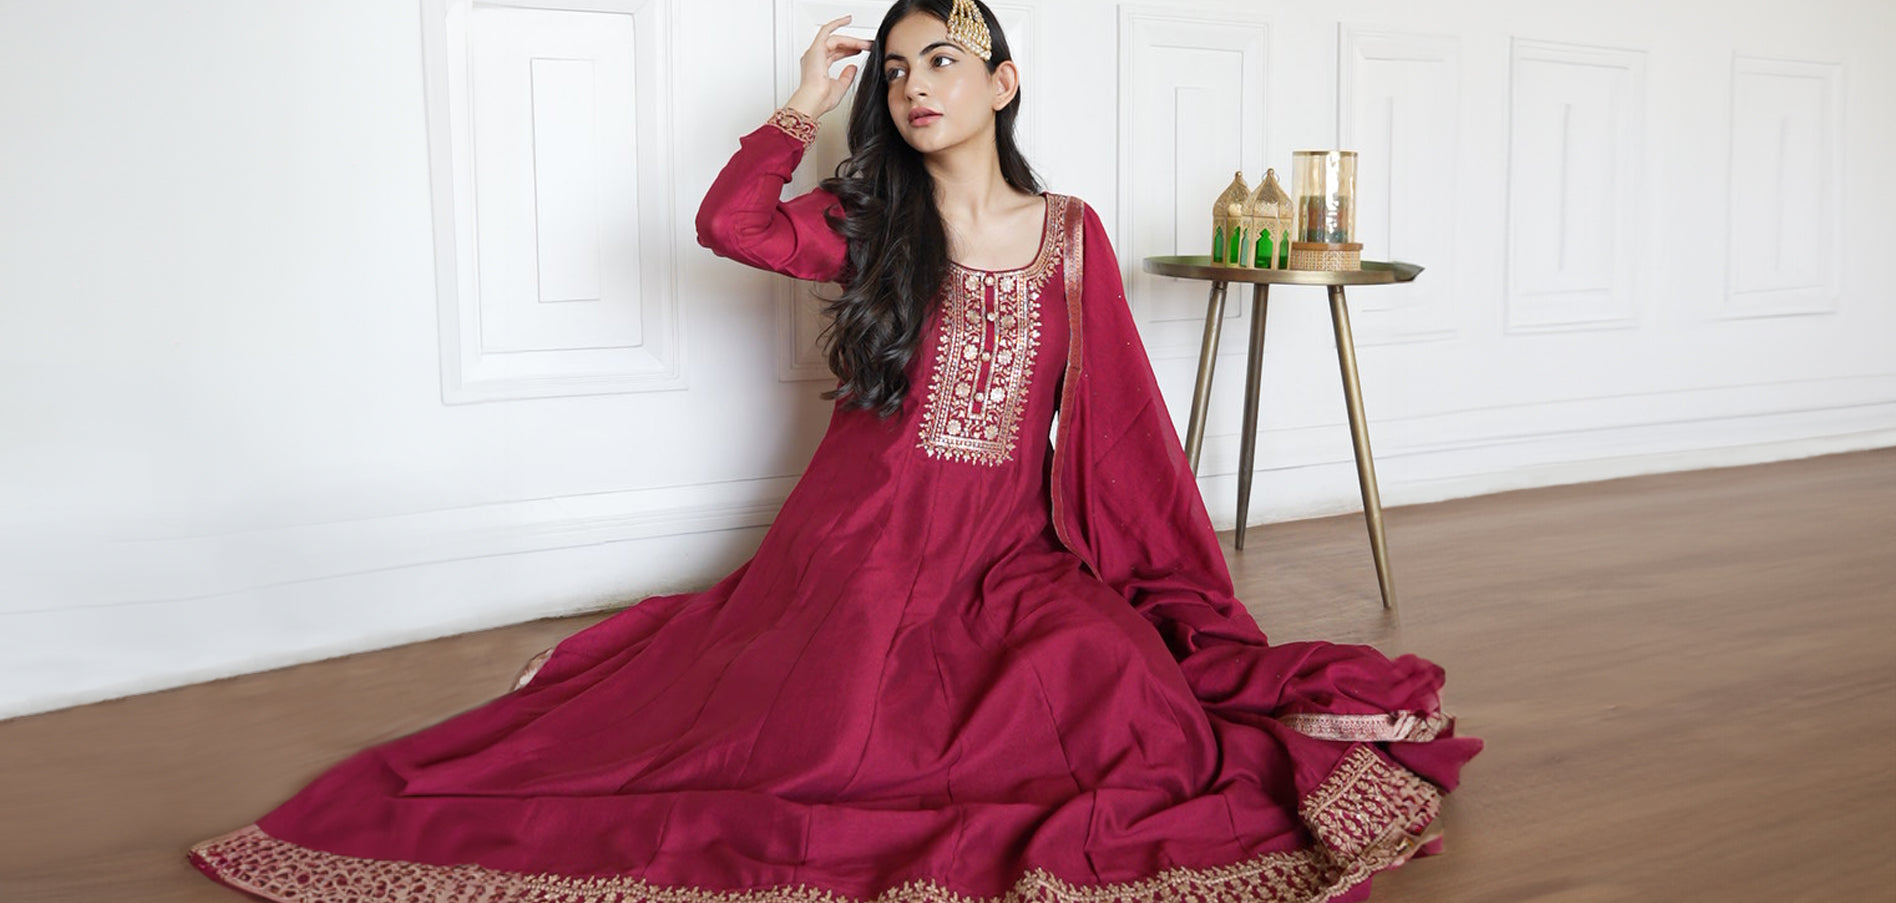 Bollywood Theme Party Dress Ideas For Men, Women & Couple